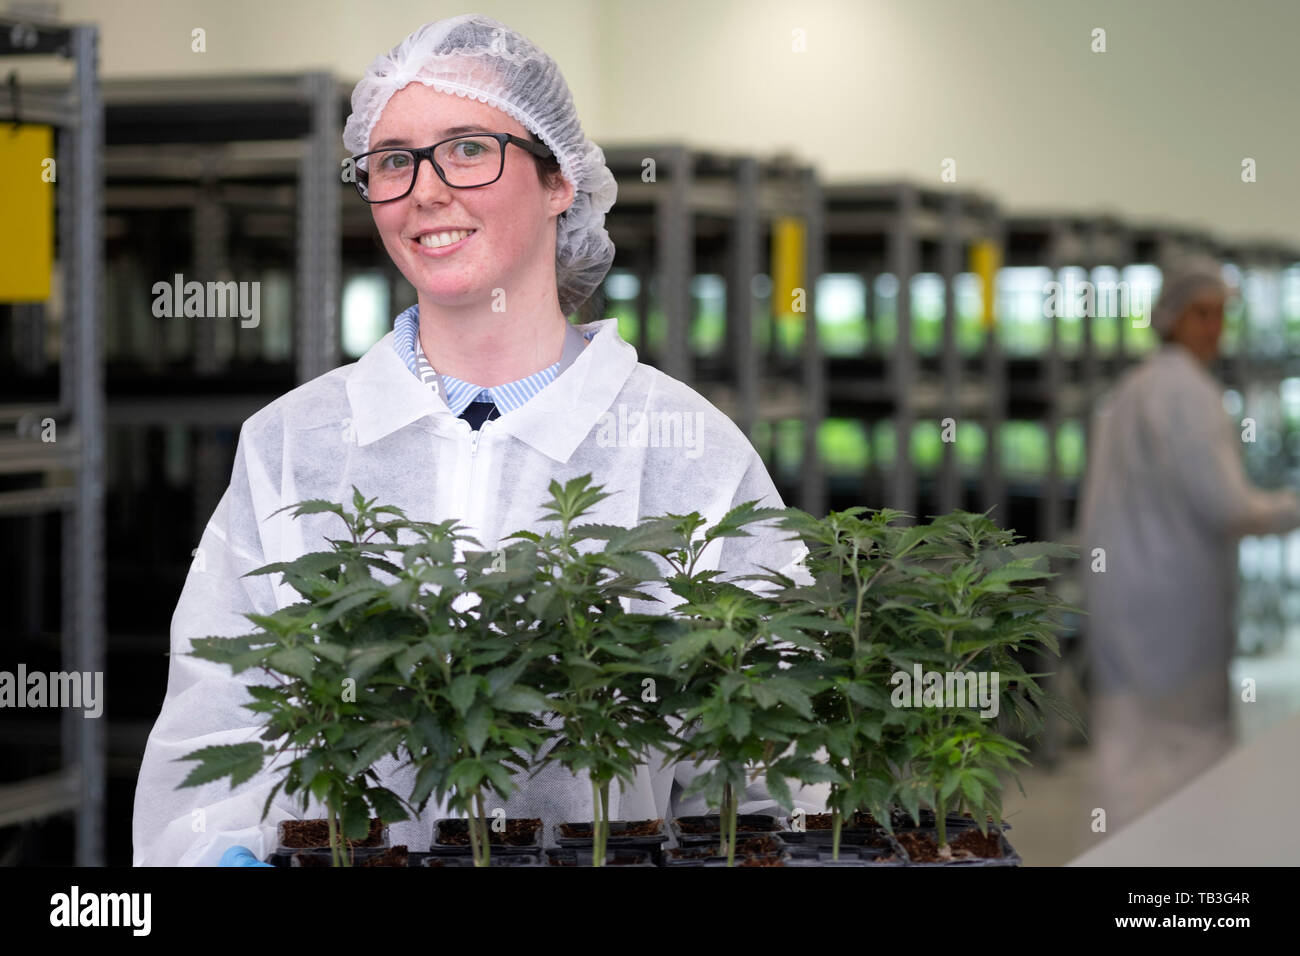 Female worker holding cannabis plants at an industrial cannabis plantation farm green house Stock Photo